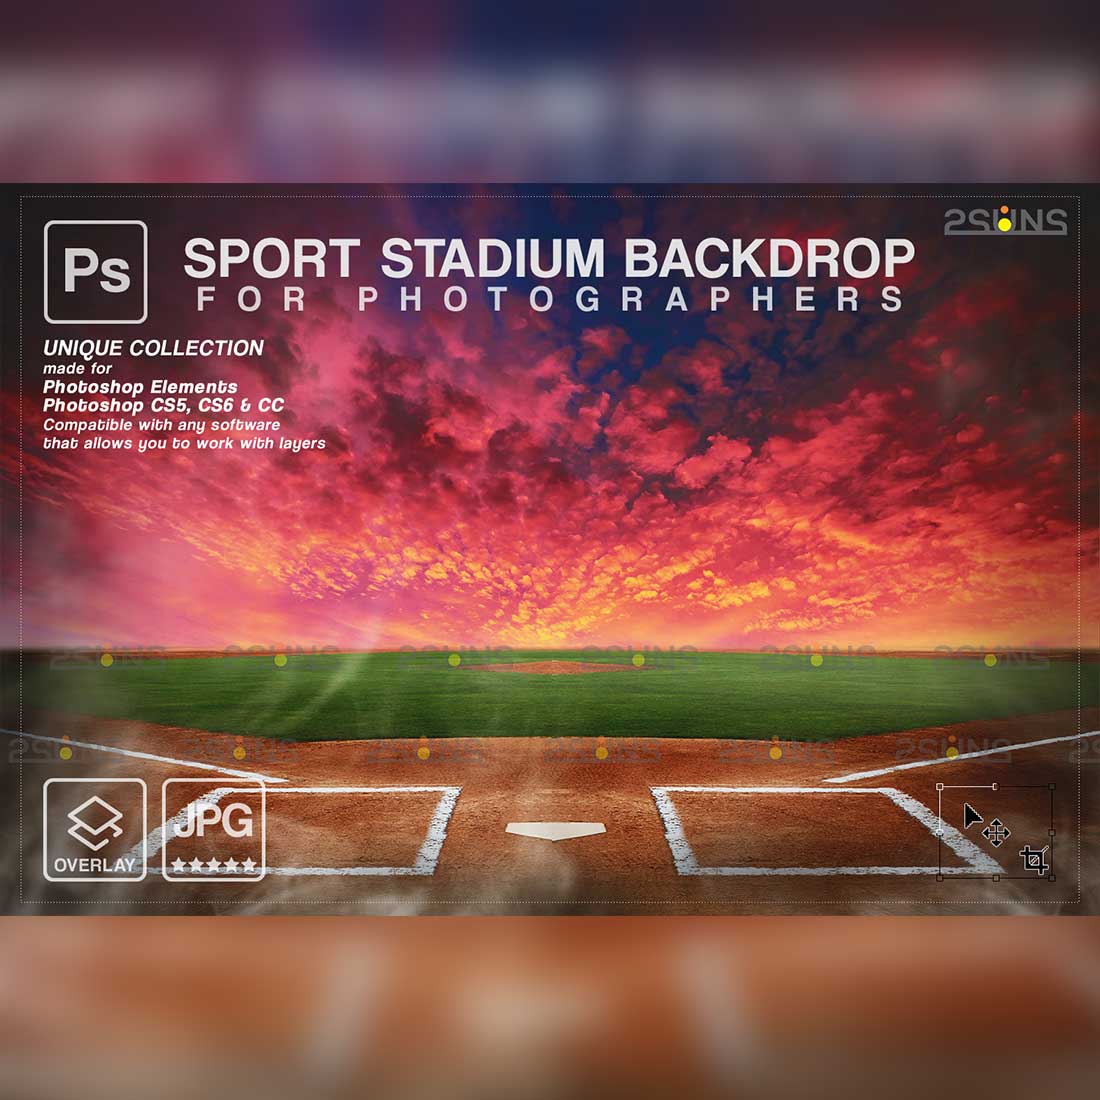 Baseball Backdrop Sports Digital Photo Background Preview Image.